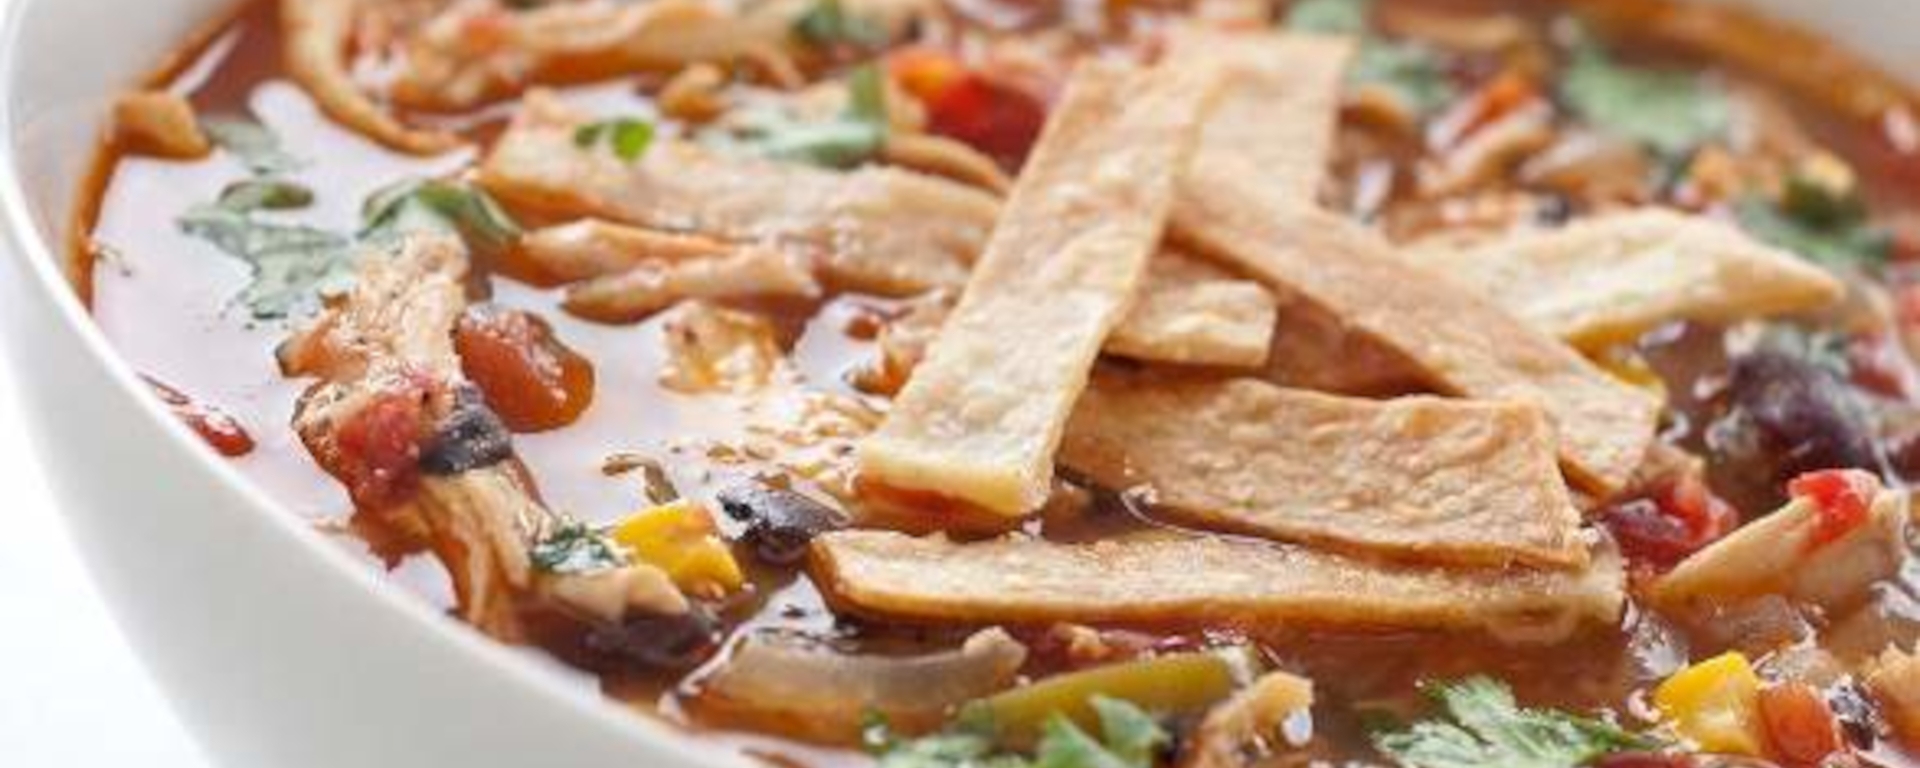 LuvMyRecipe.com - Best Tortilla Soup Recipe Featured